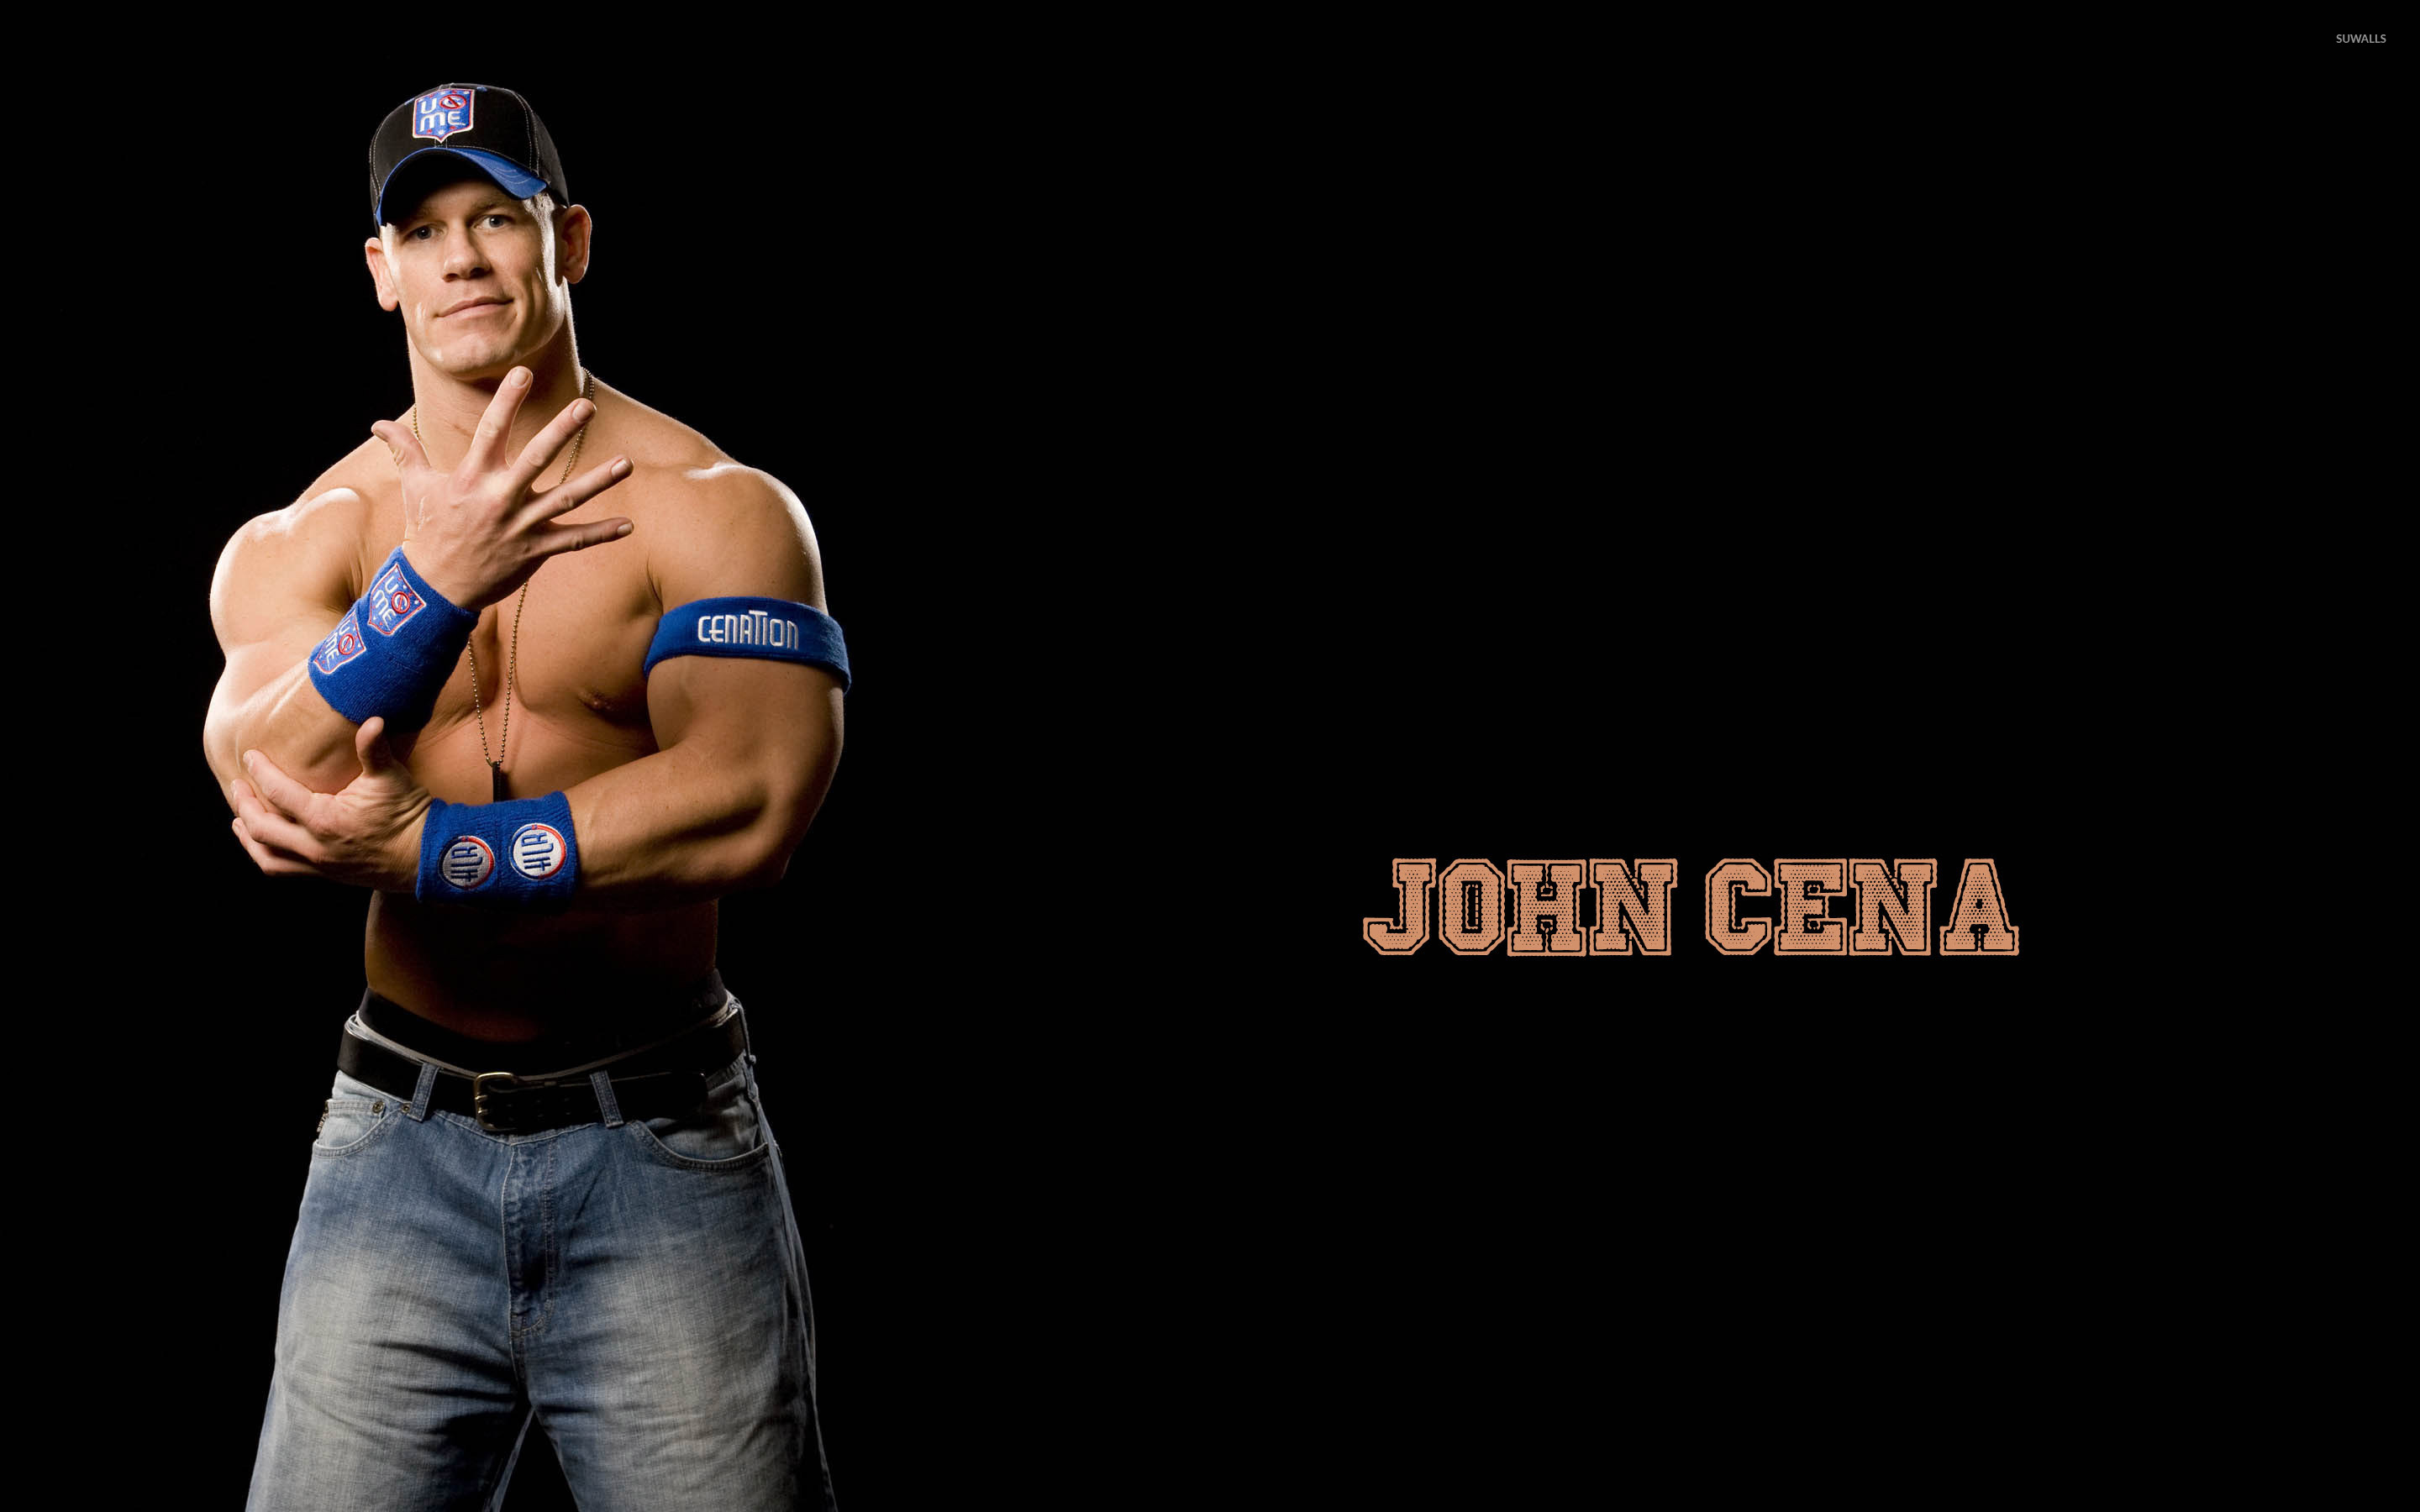 John Cena - HD Wallpaper 